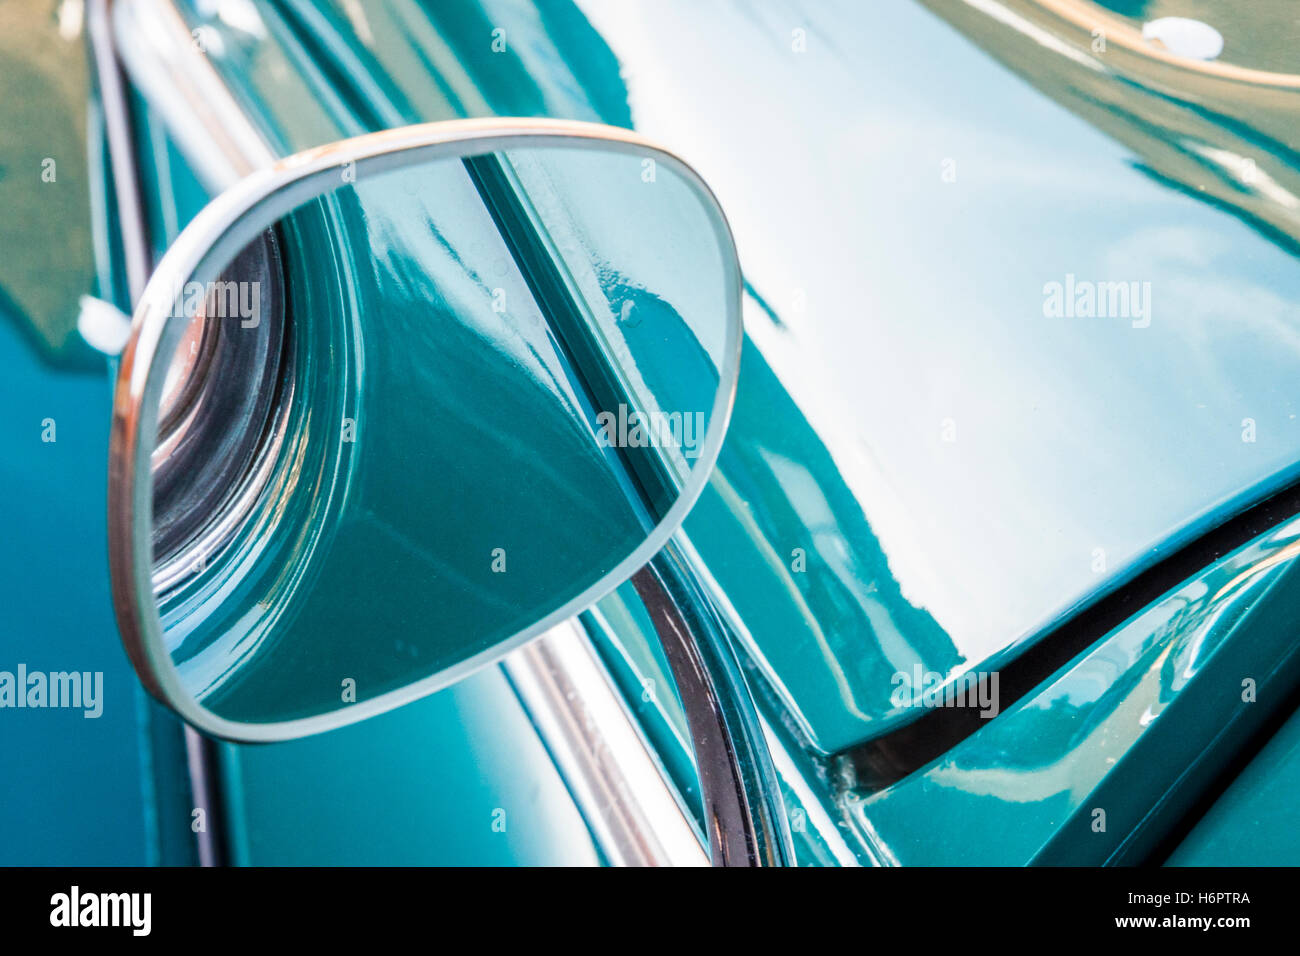 Glänzend grünes auto -Fotos und -Bildmaterial in hoher Auflösung – Alamy